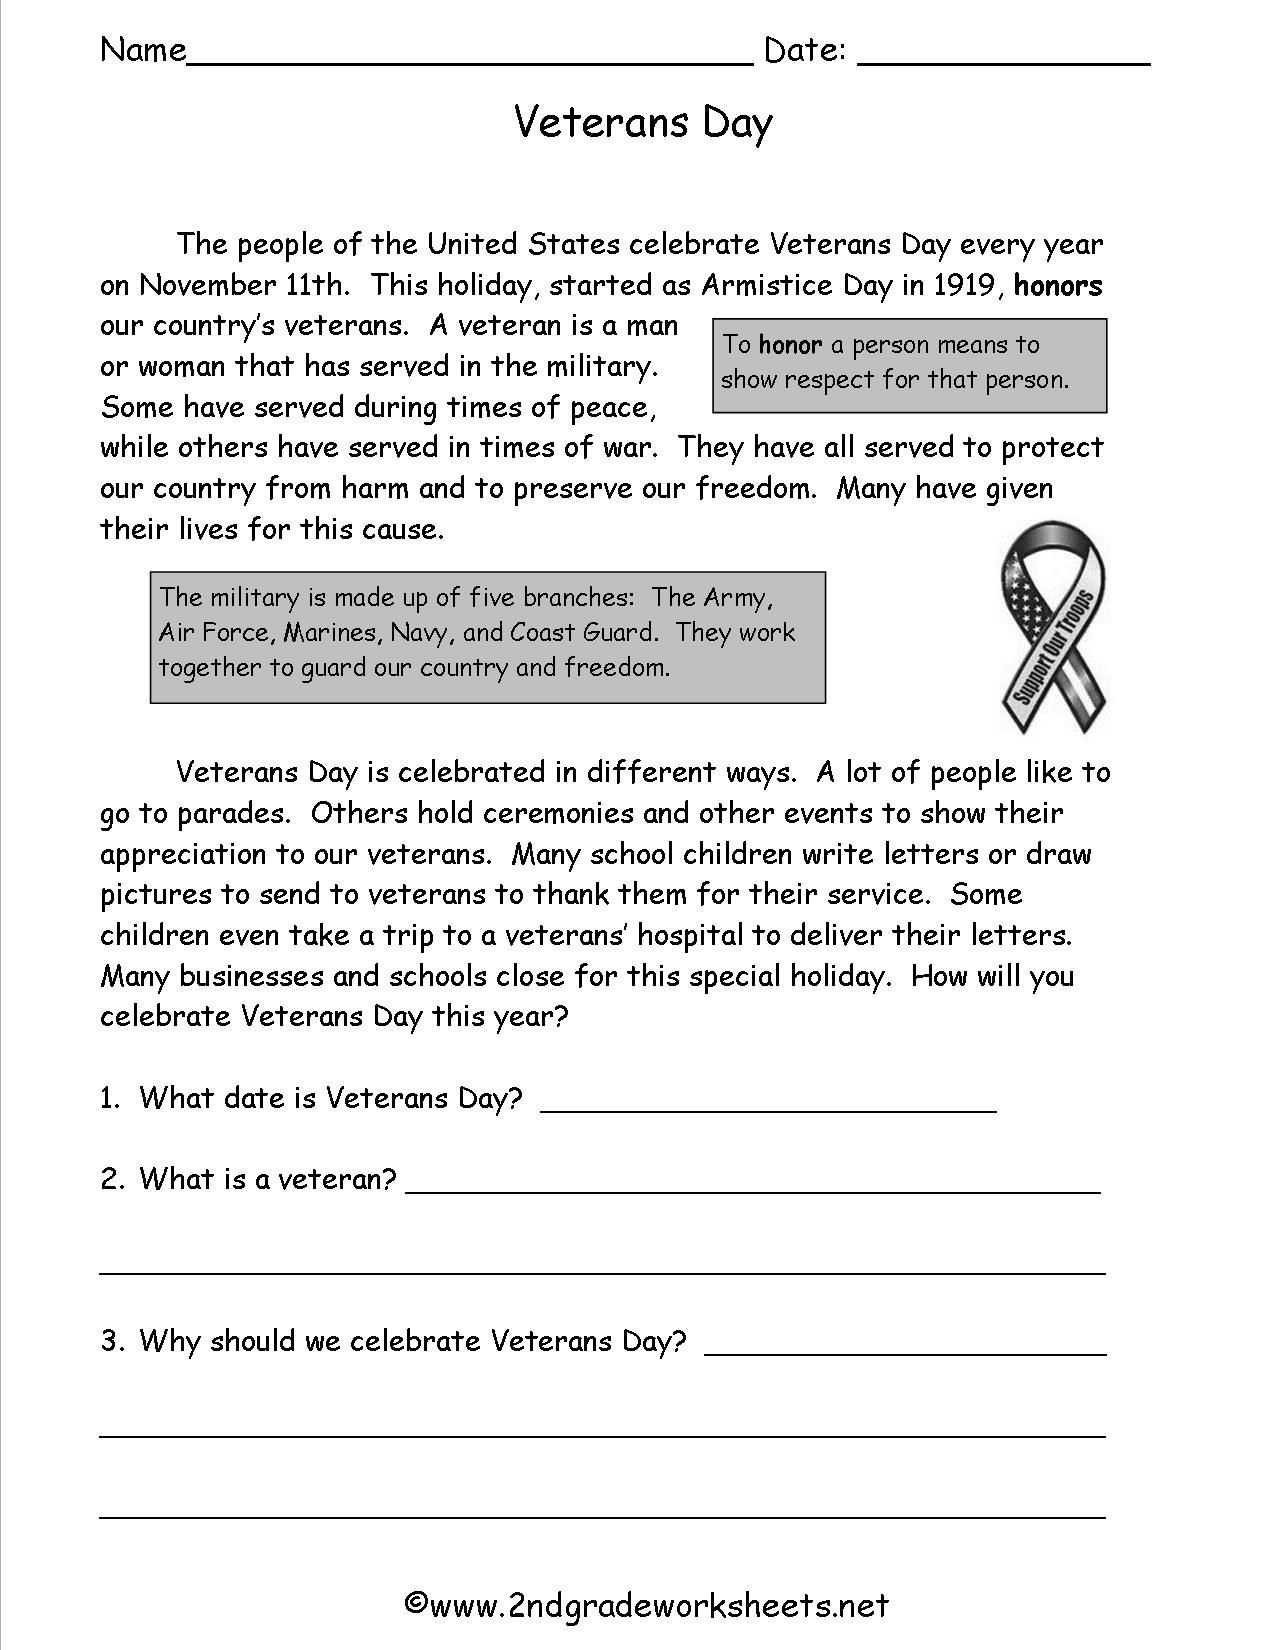 Unscramble Sentences Worksheets 1st Grade and Veterans Day Worksheets